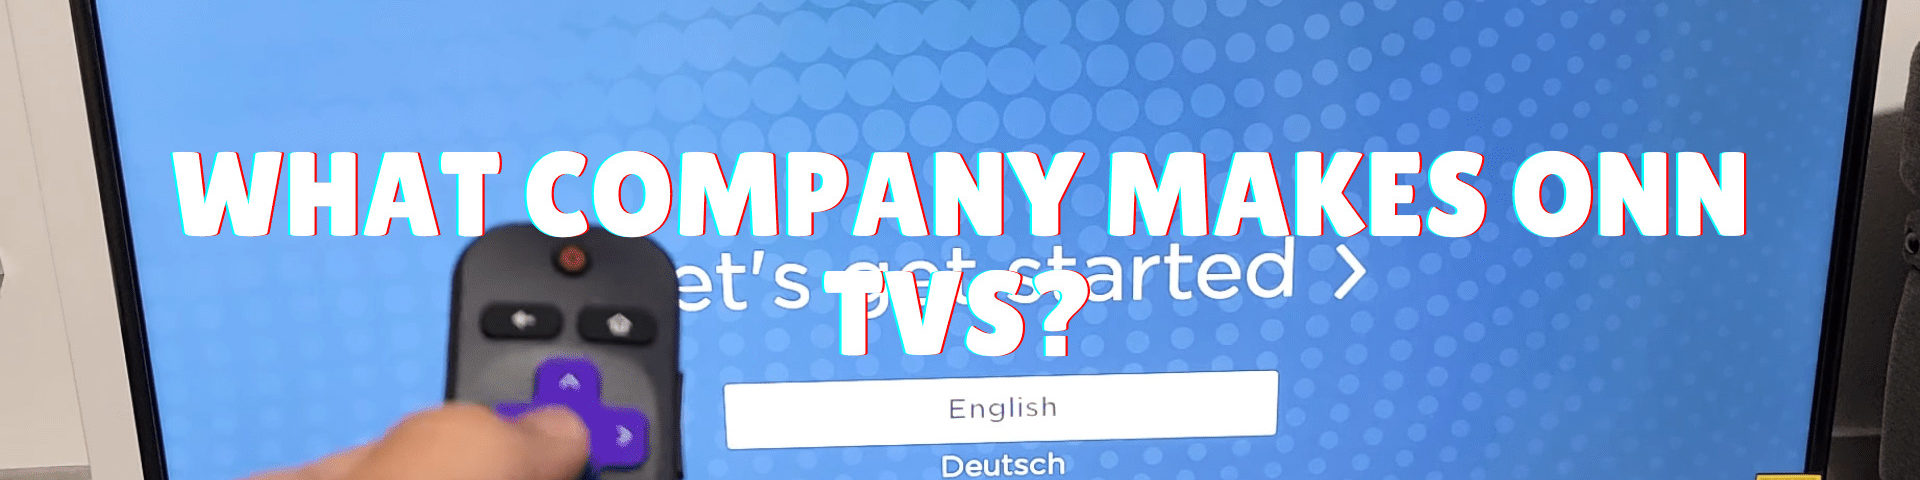 what company makes onn tvs